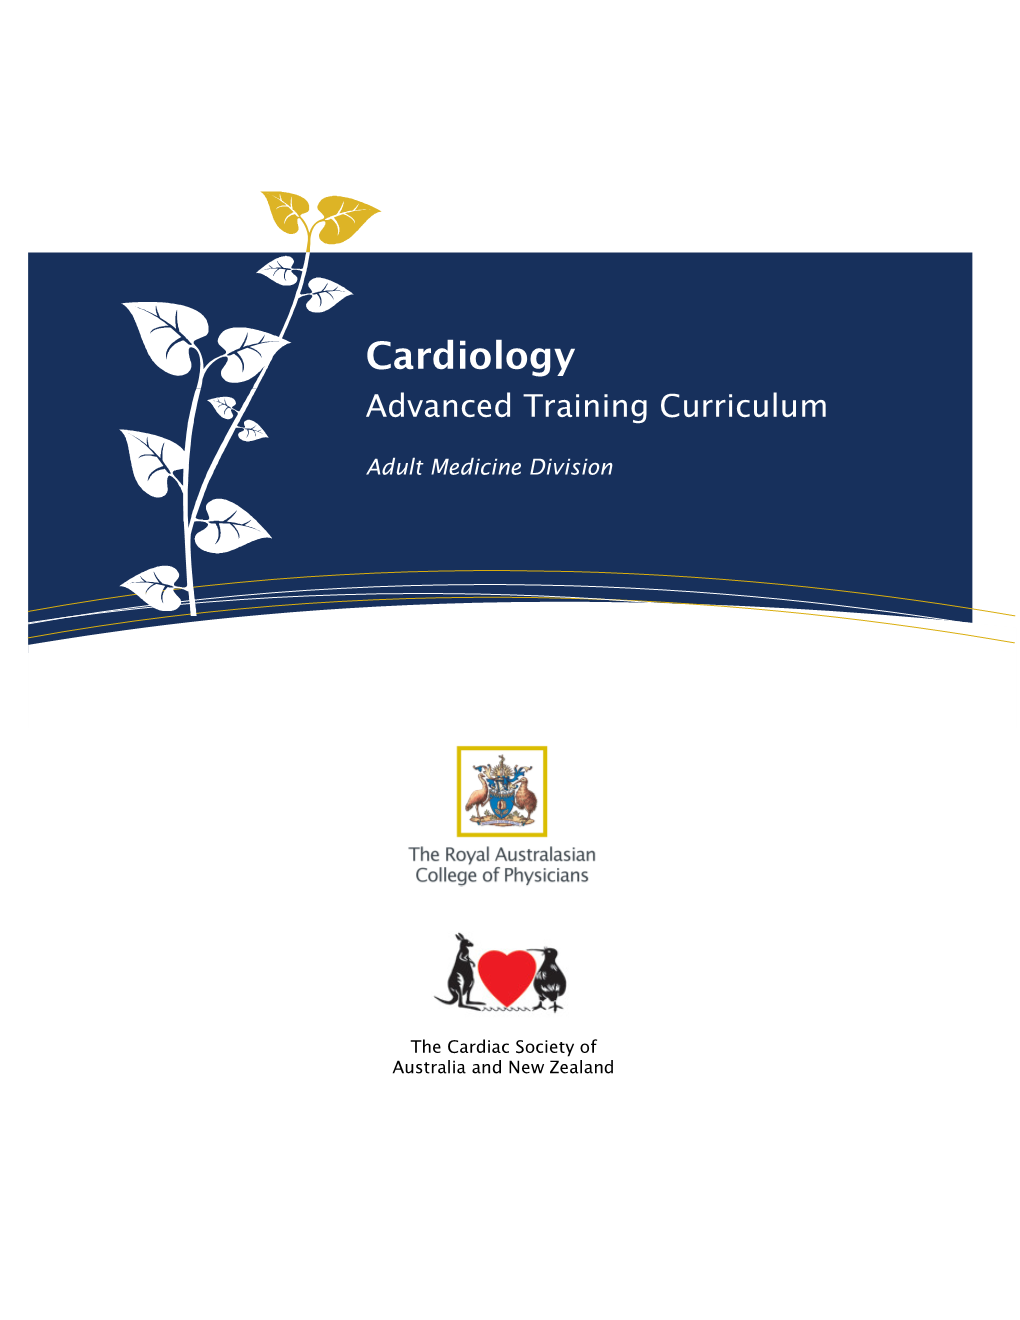 Adult Cardiology Advanced Training Curriculum